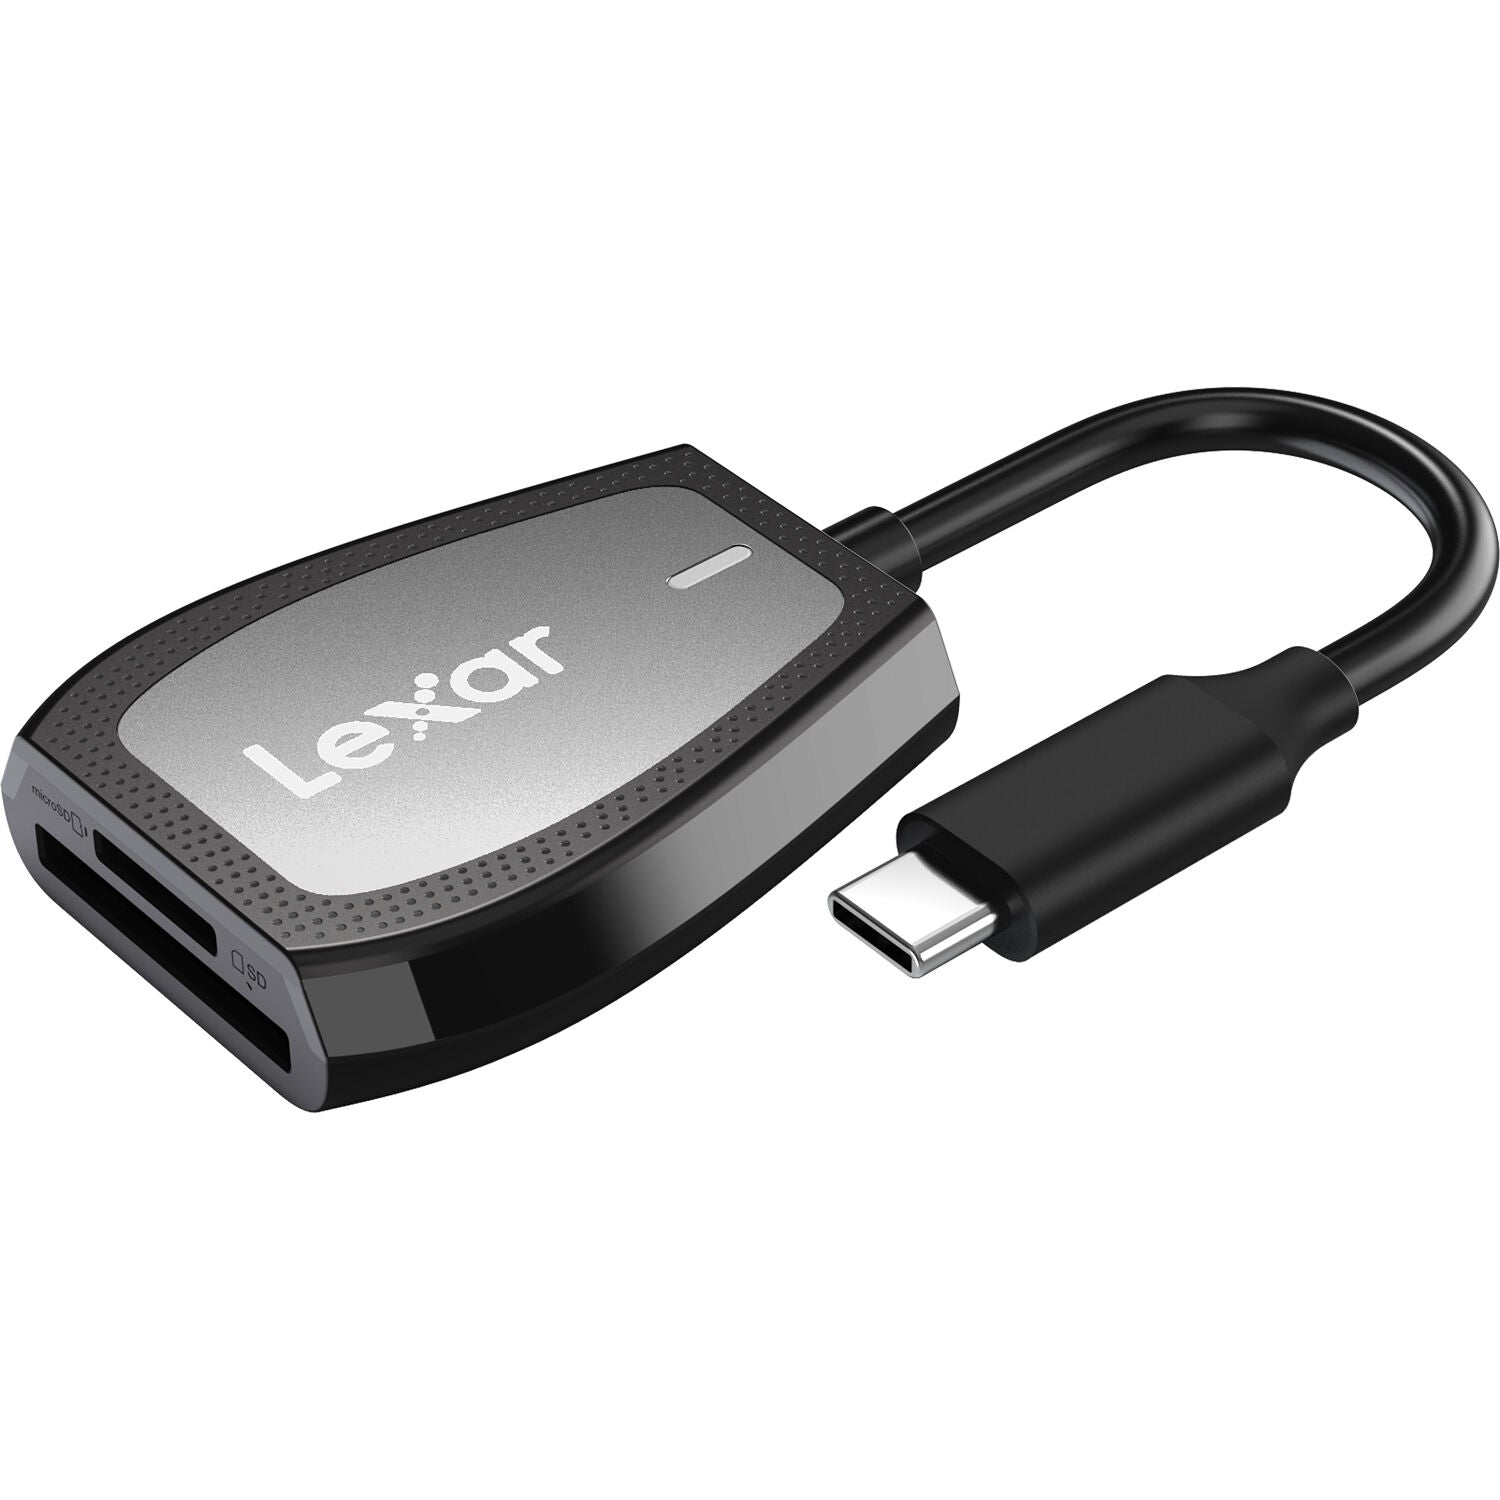 Lecteur de cartes SD dual-slot USB 3.0 - Lecteurs de carte USB